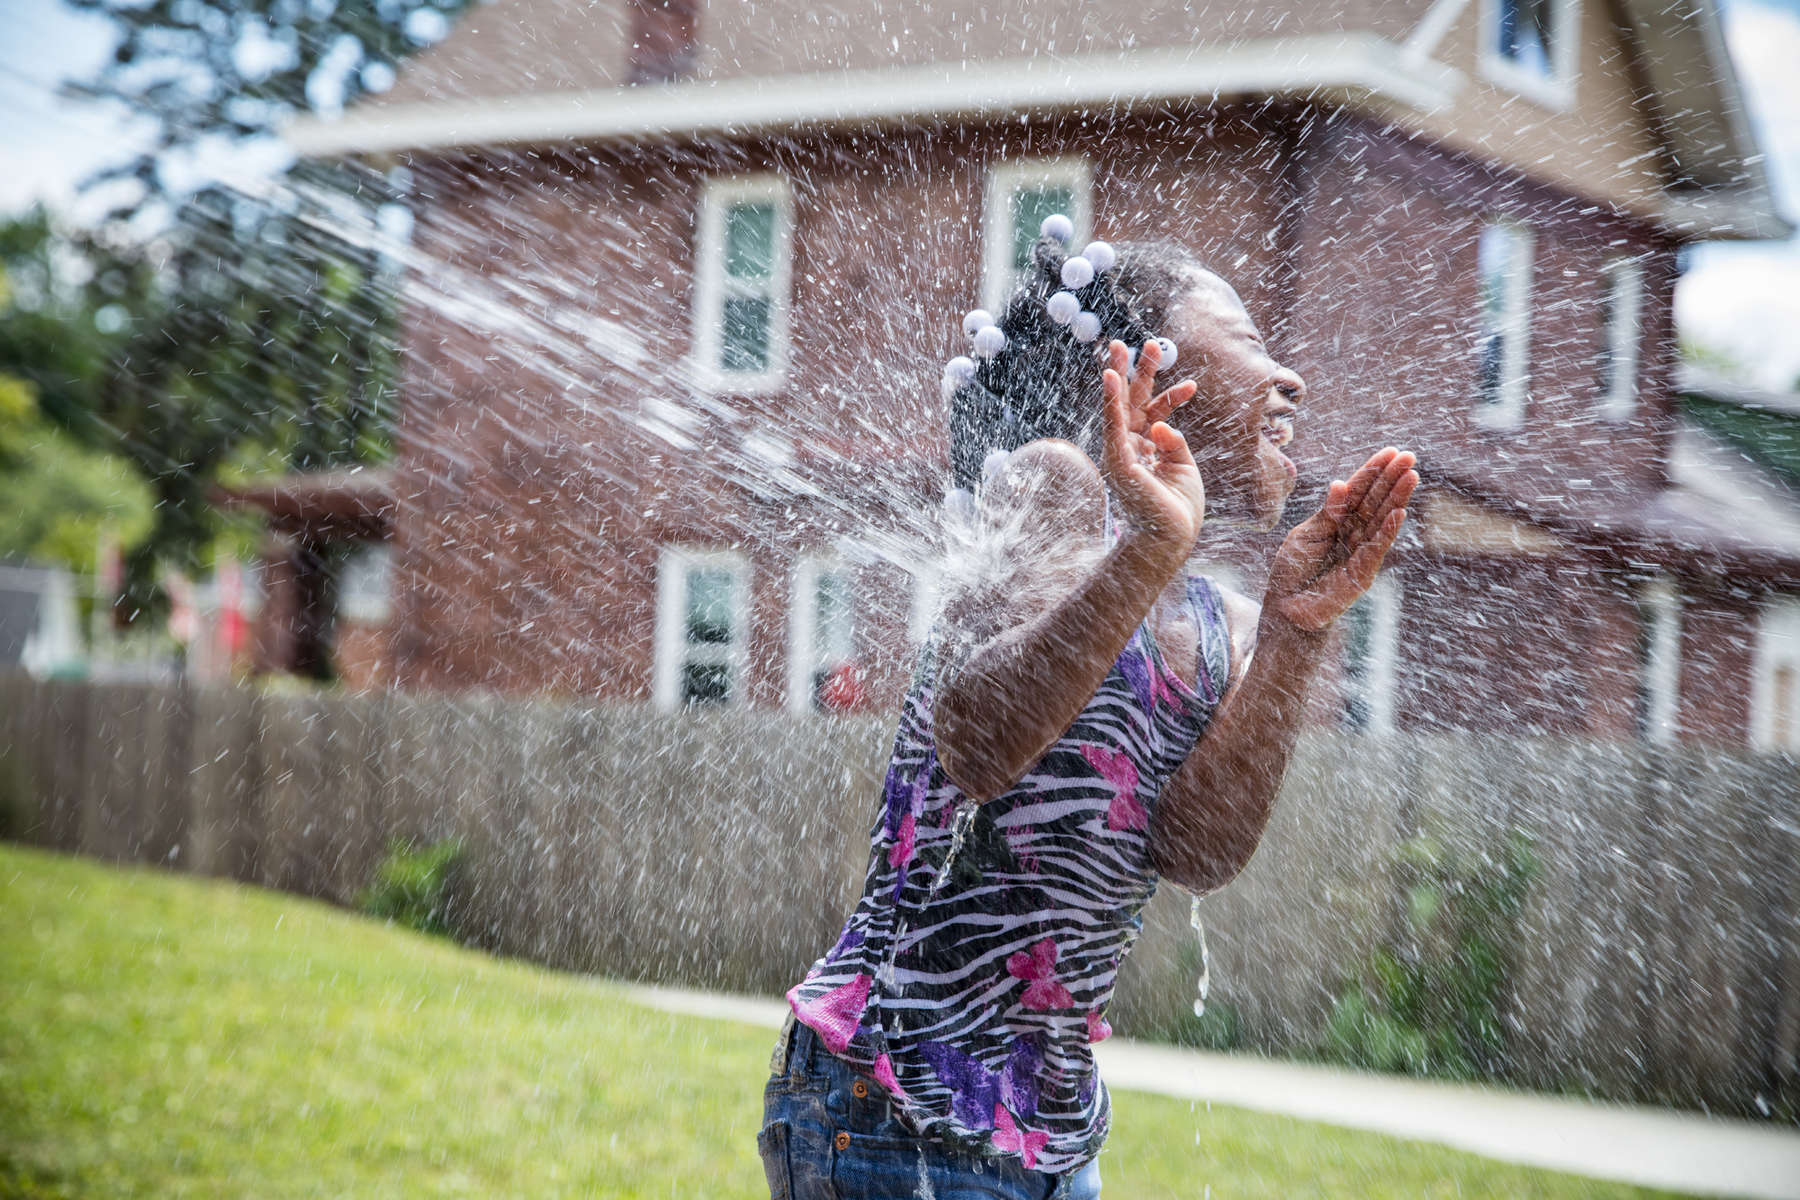 Water fight in the backyard.© Habitat for Humanity International/Ezra Millstein